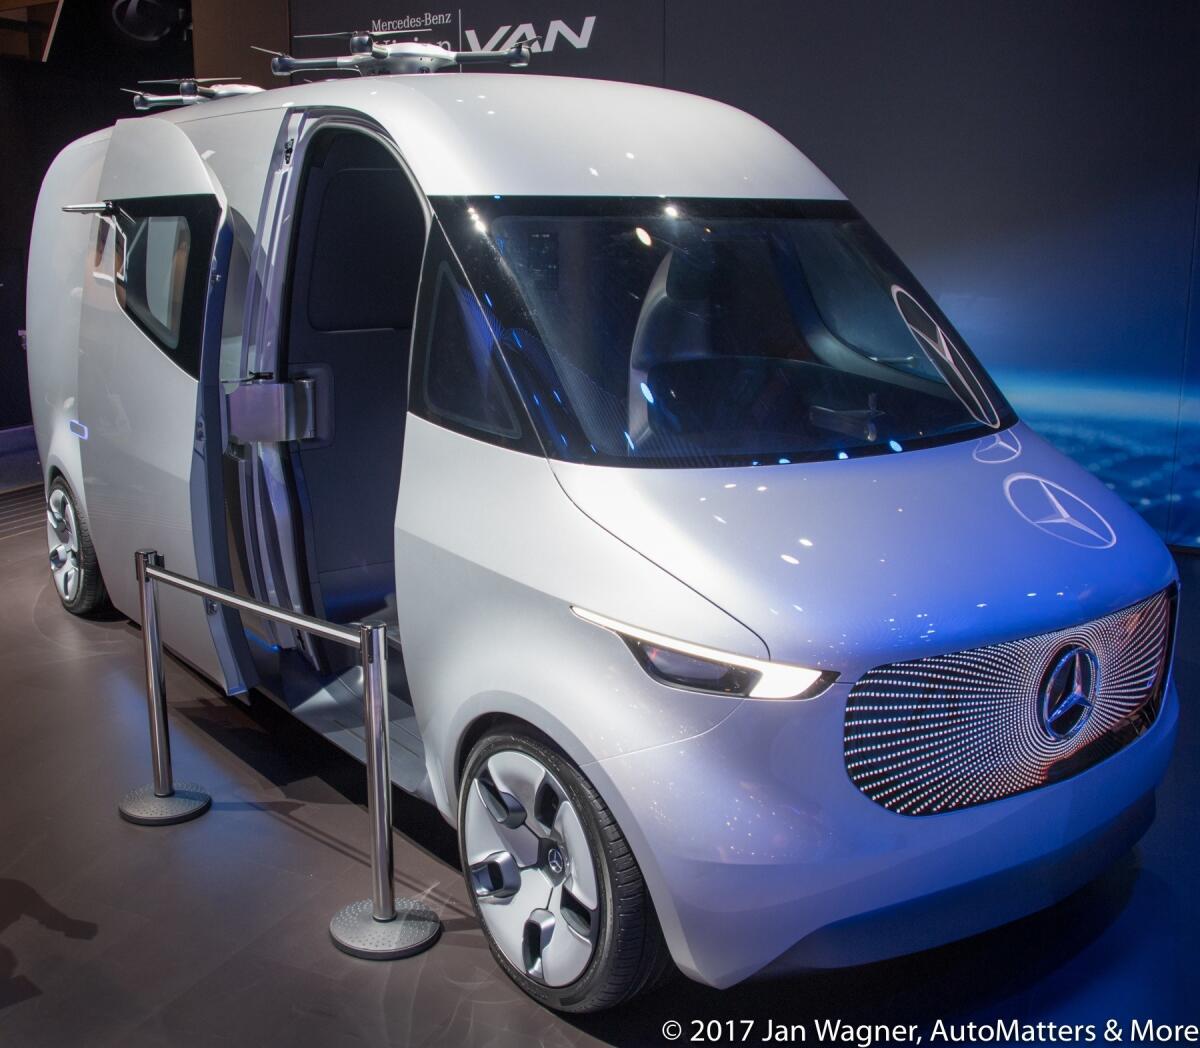 Mercedes-Benz Vision Van concept on display at CES